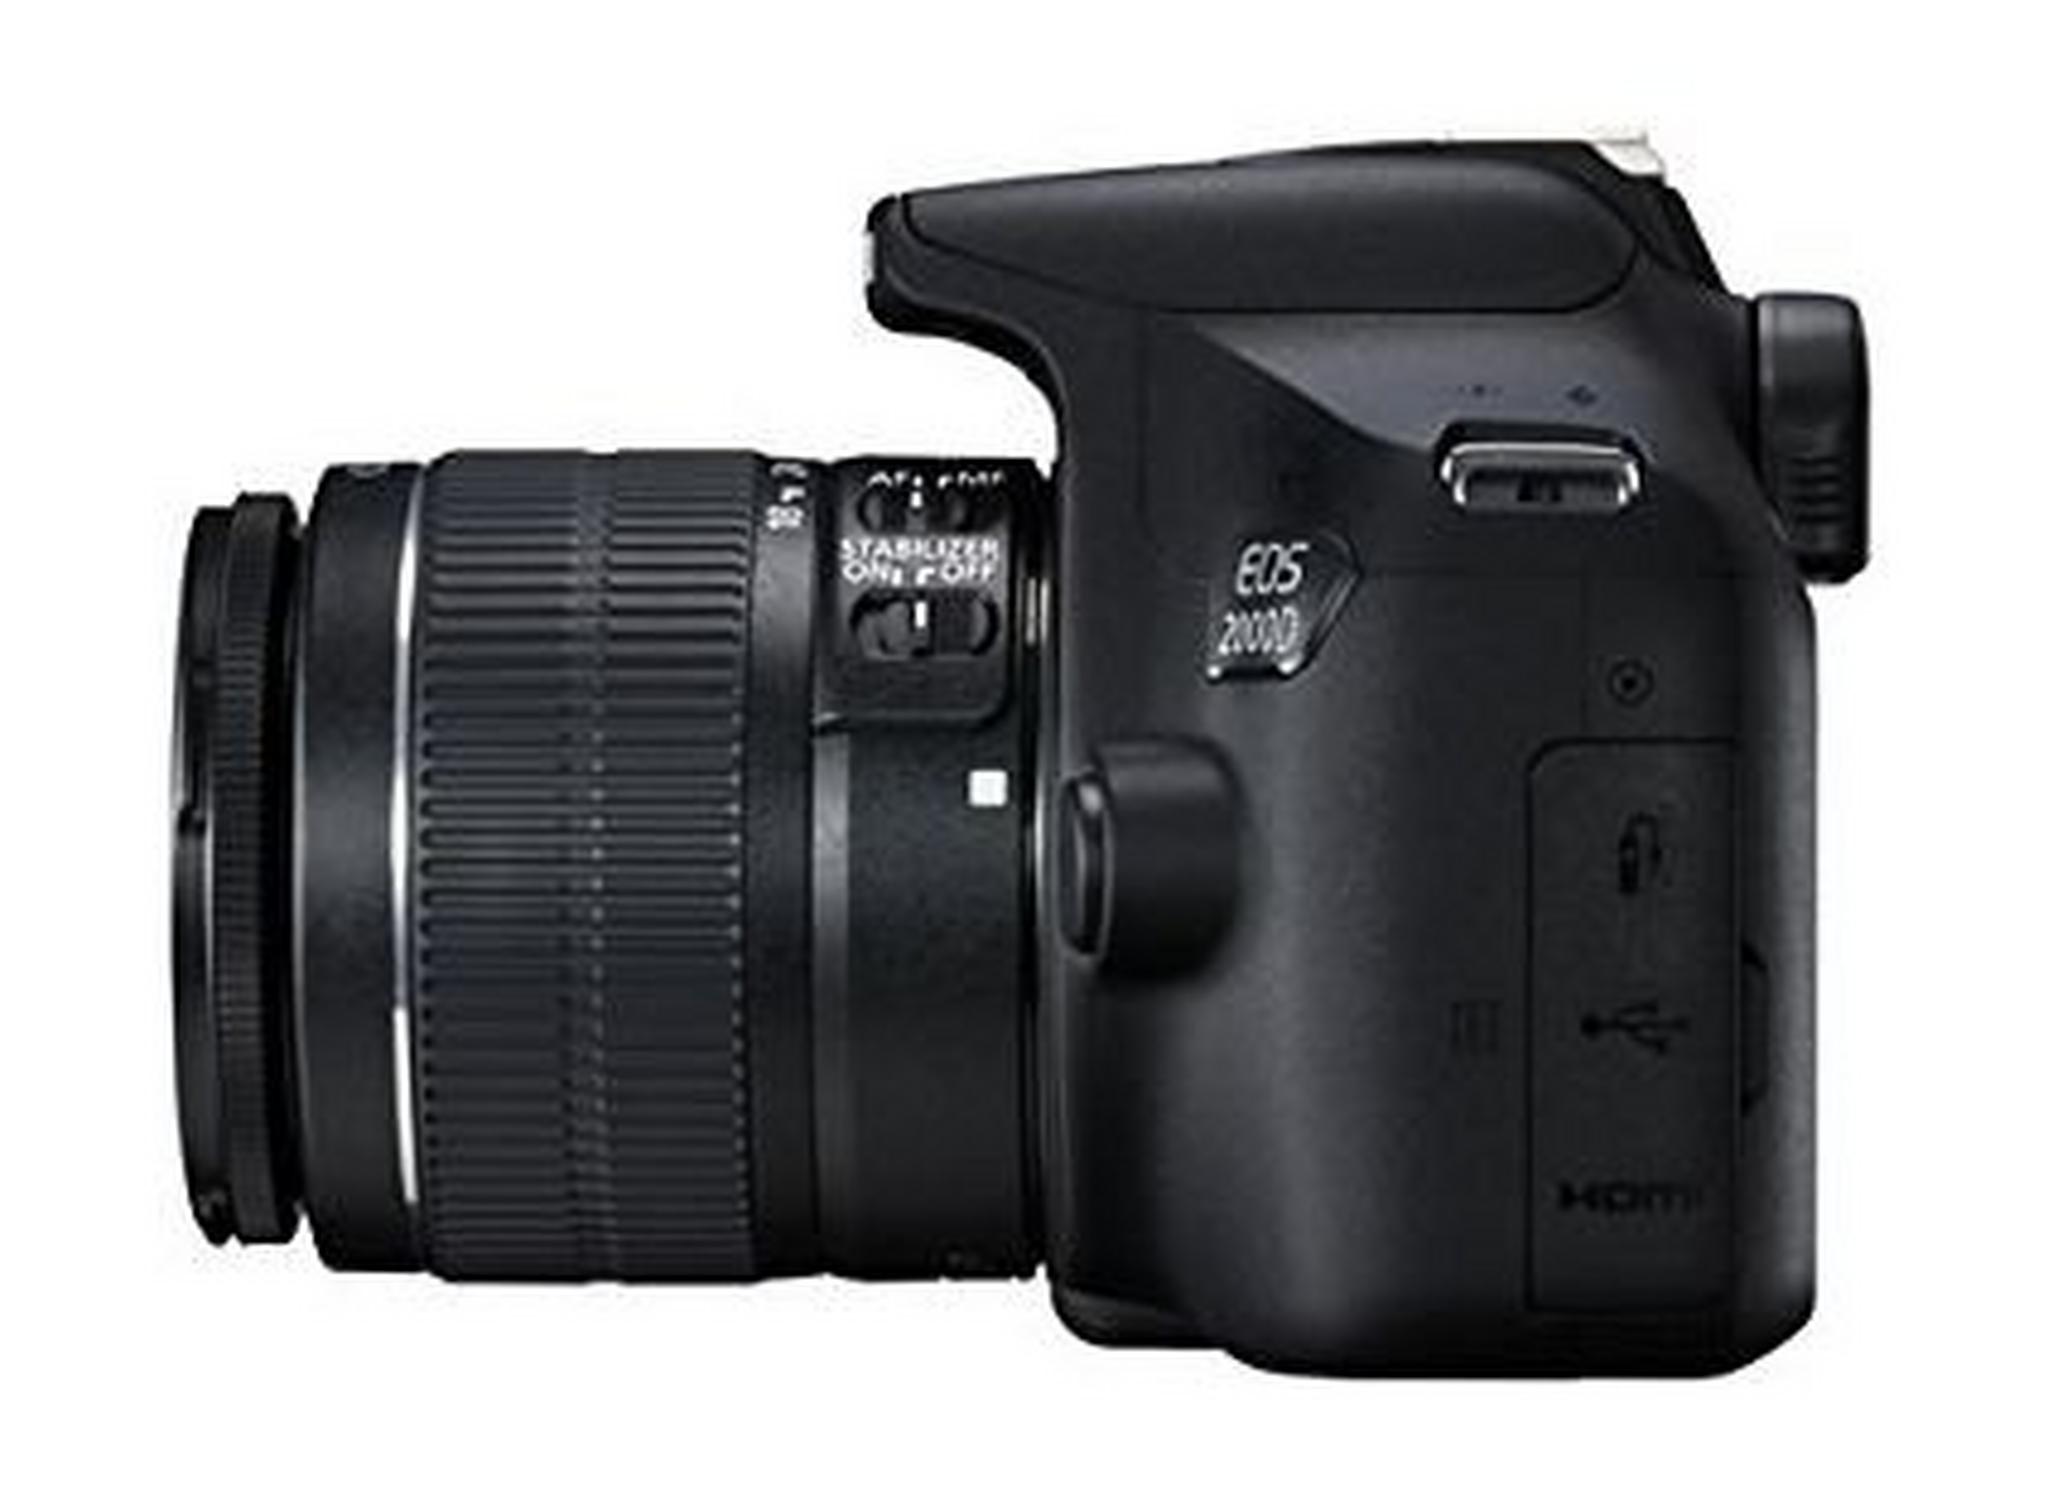 Canon EOS 2000D DSLR Camera + 18-55mm Lens